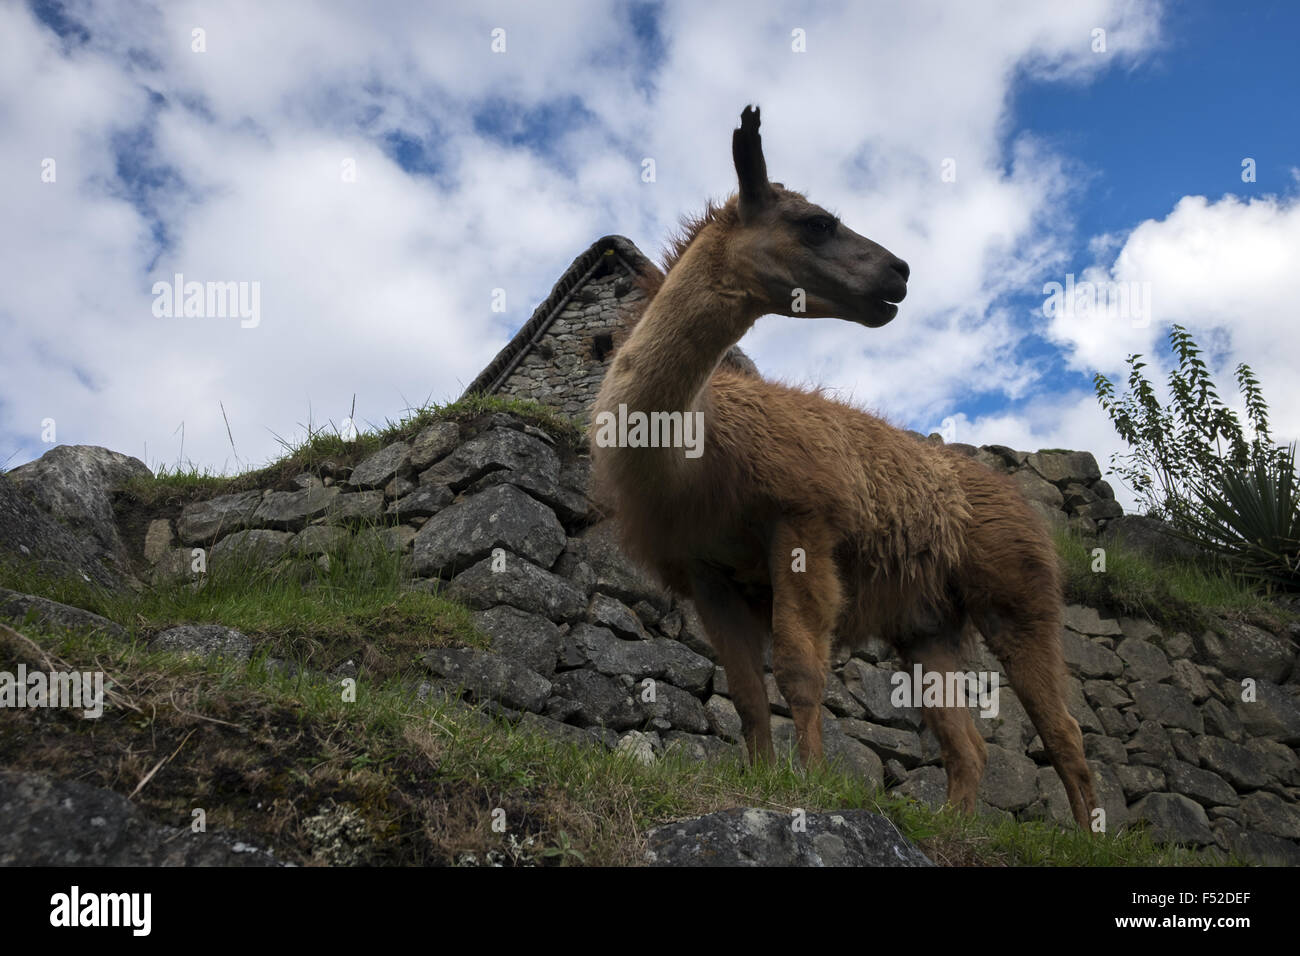 Llama next to the caretaker cabana in the city of Machu Picchu Stock Photo